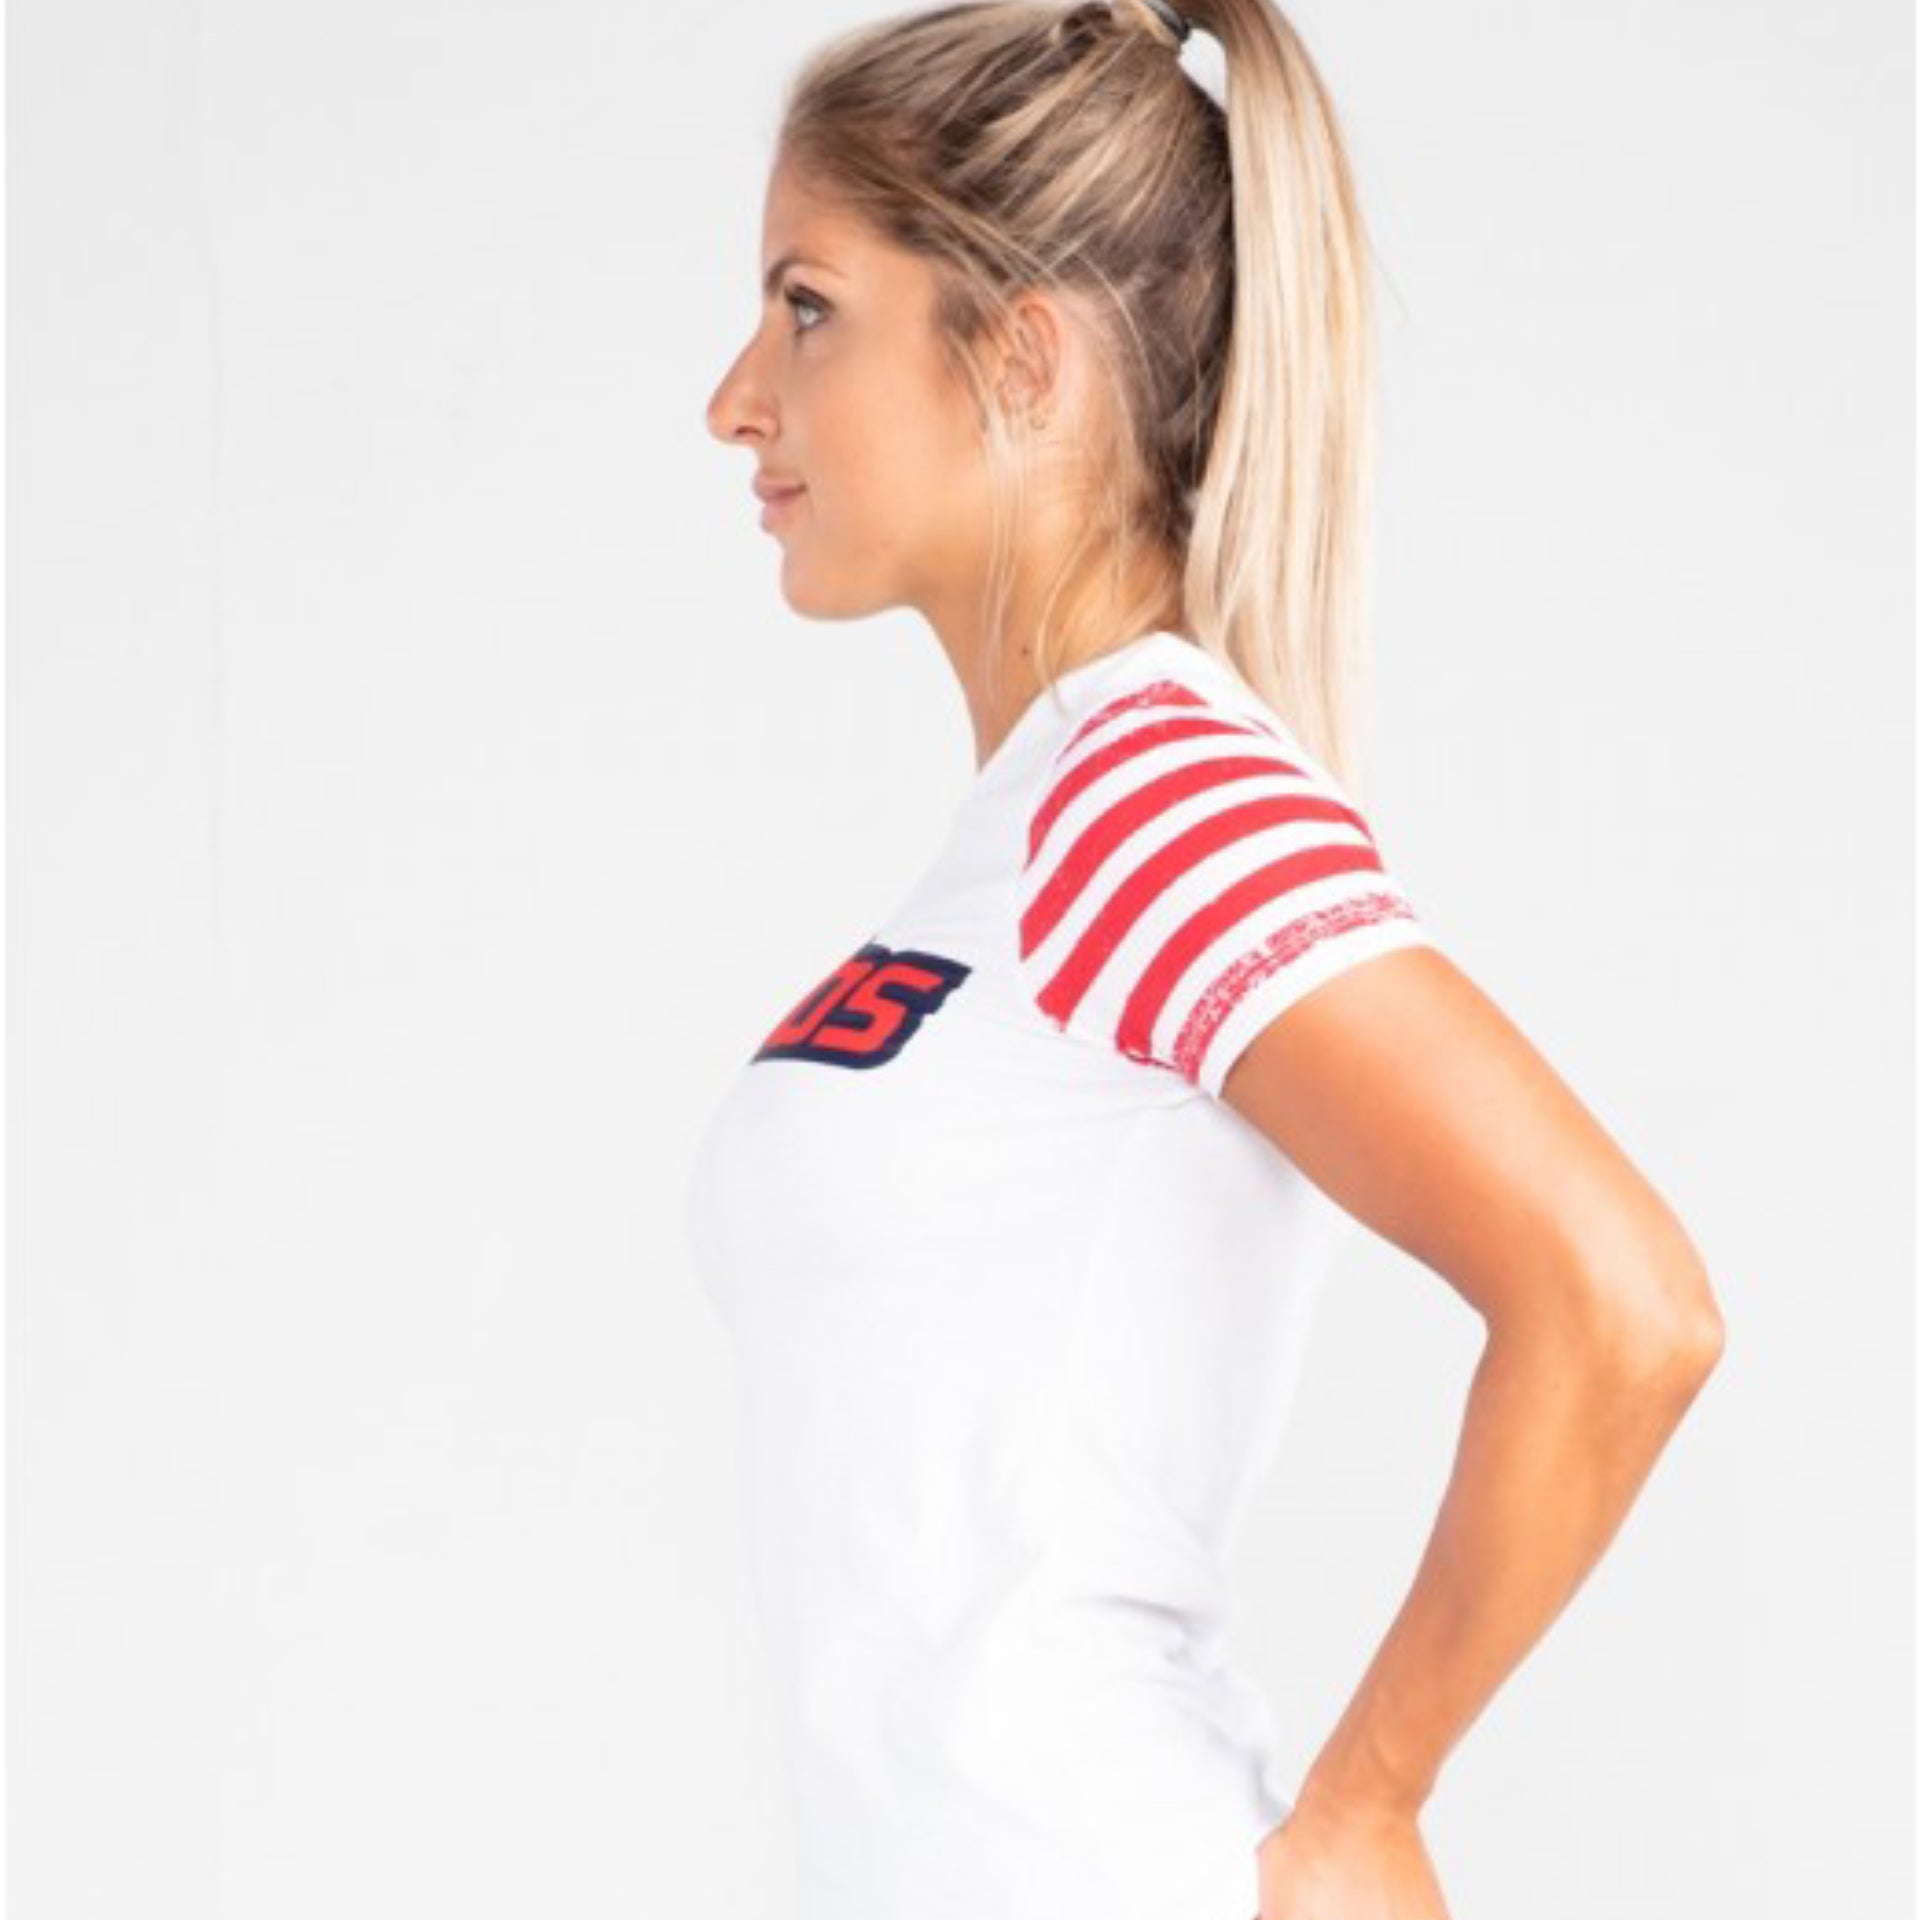 EHPlabs Patriotic T-Shirt - Women's